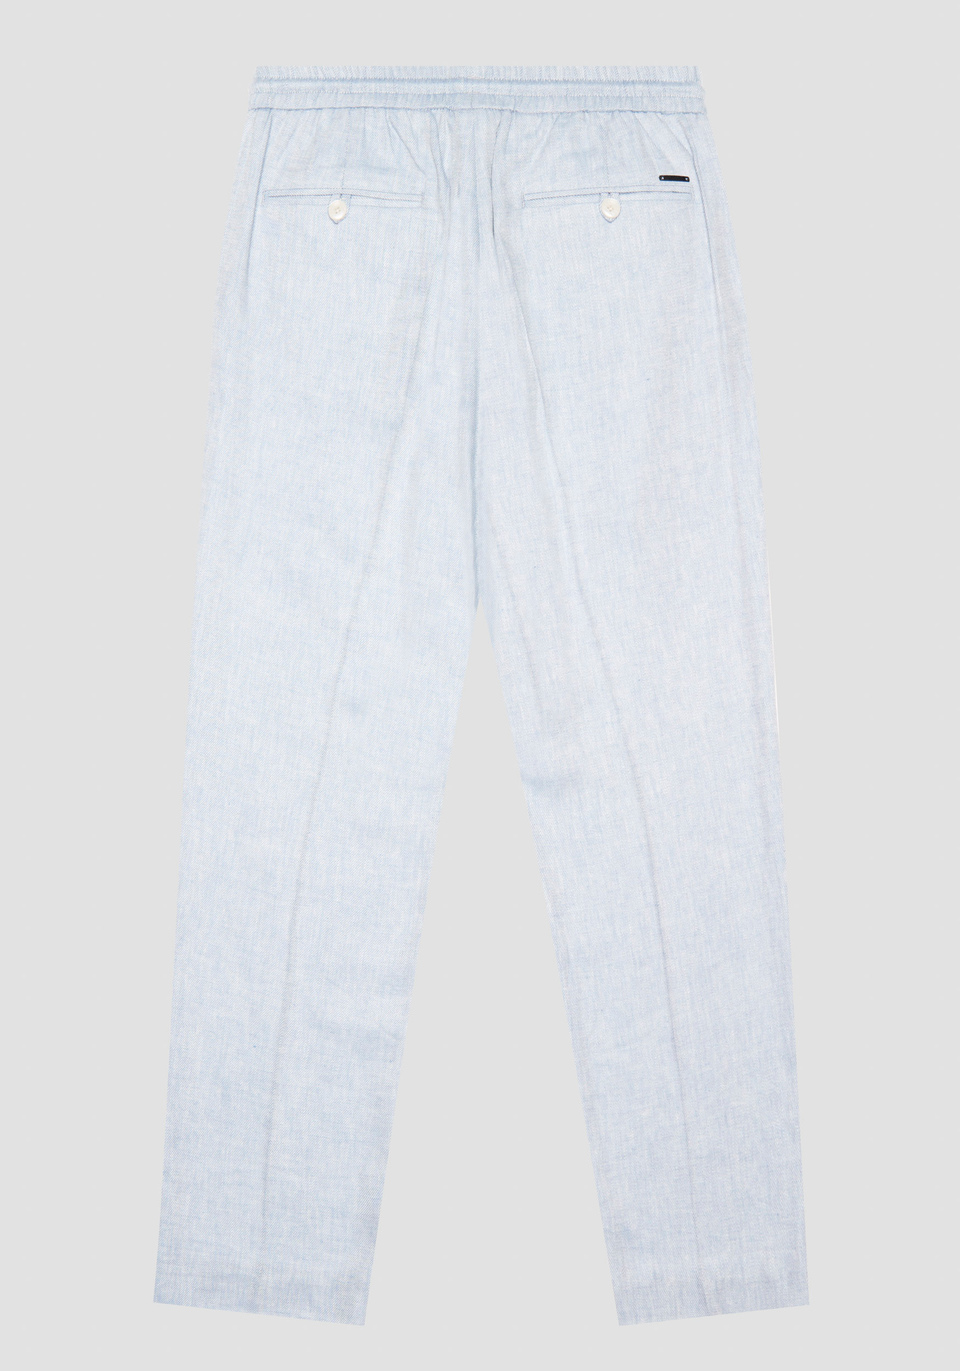 REGULAR FIT "NEIL" LINEN BLEND PANTS WITH DRAWSTRING - Antony Morato Online Shop